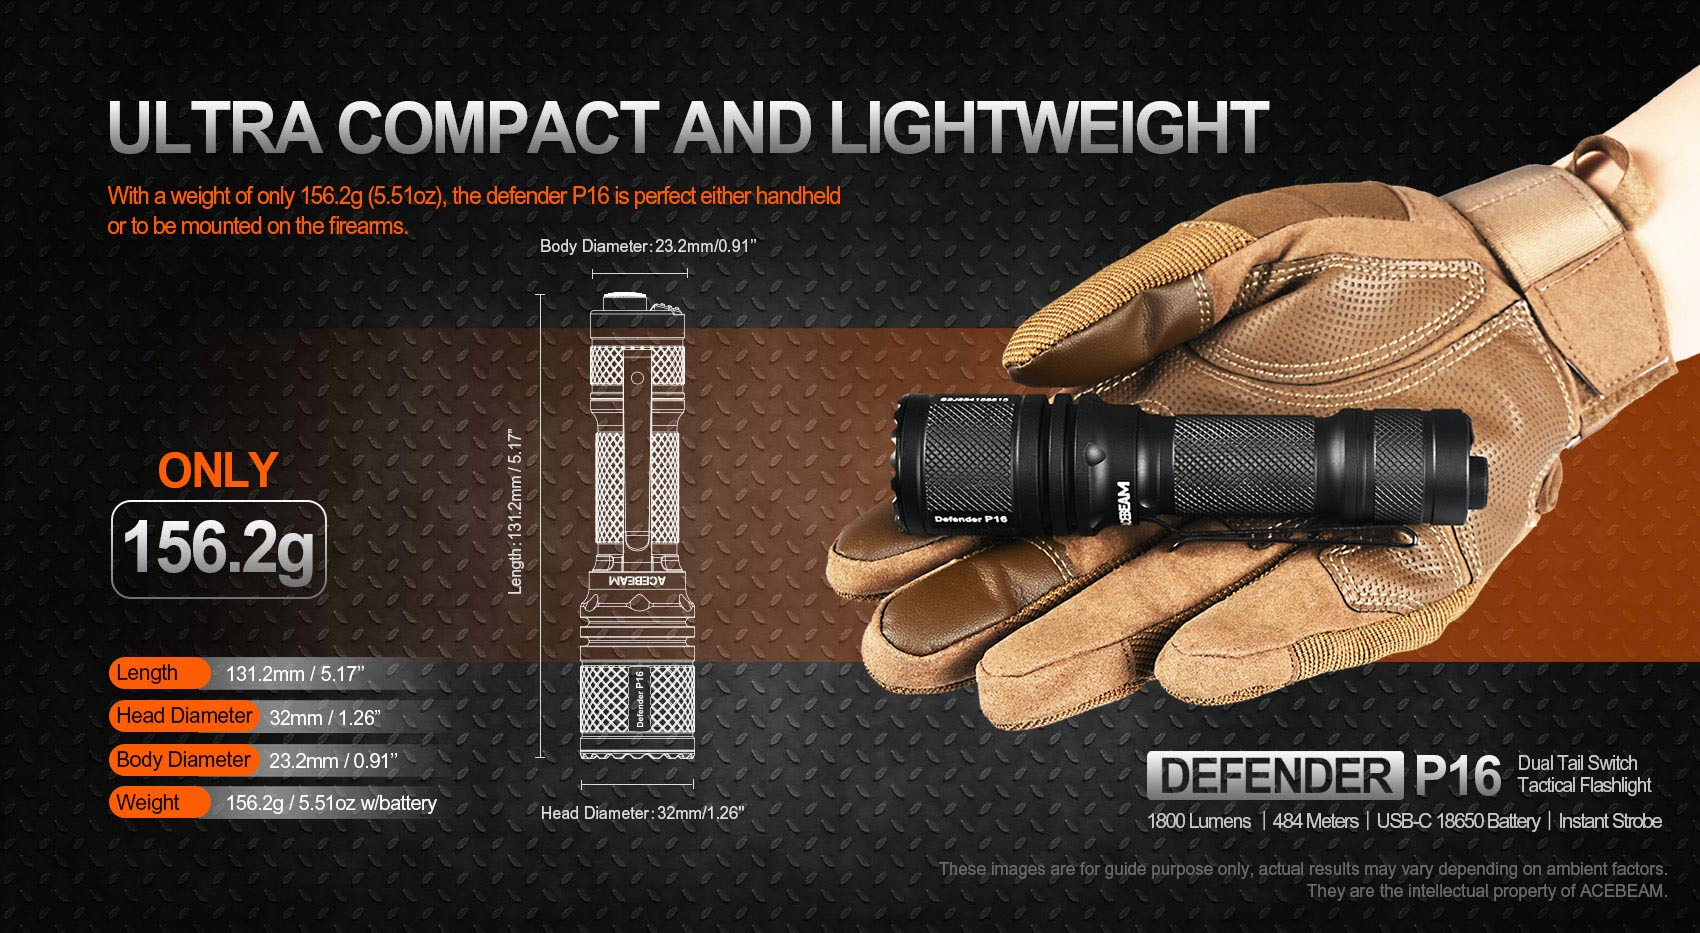 Acebeam Defender P16 Tactical LED Flashlight